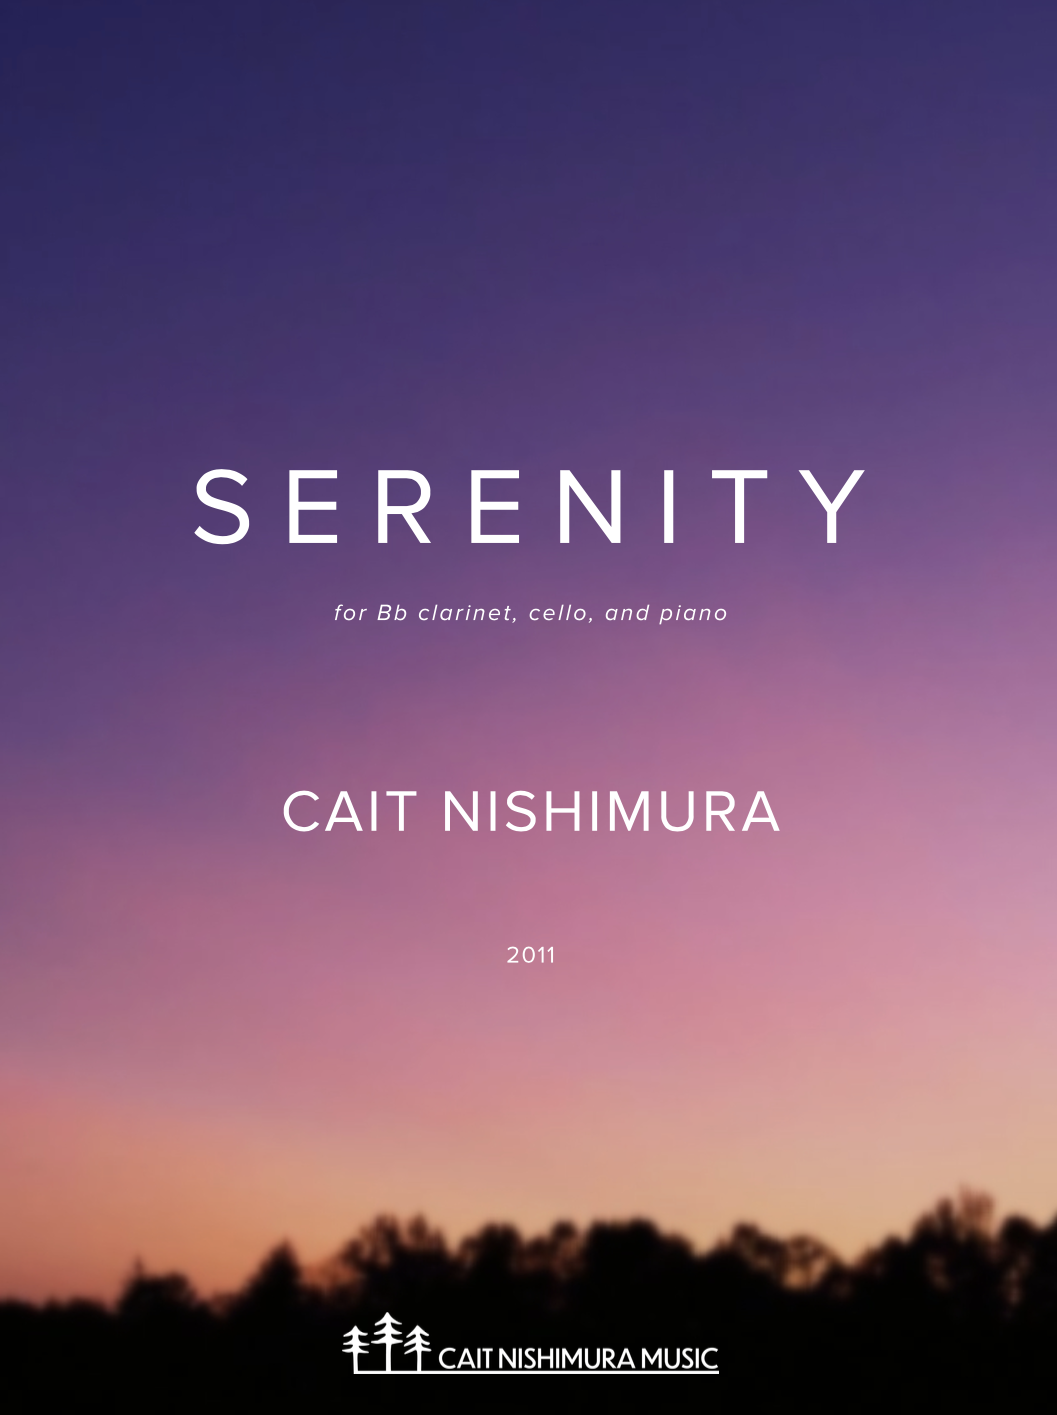 Serenity by Cait Nishimura